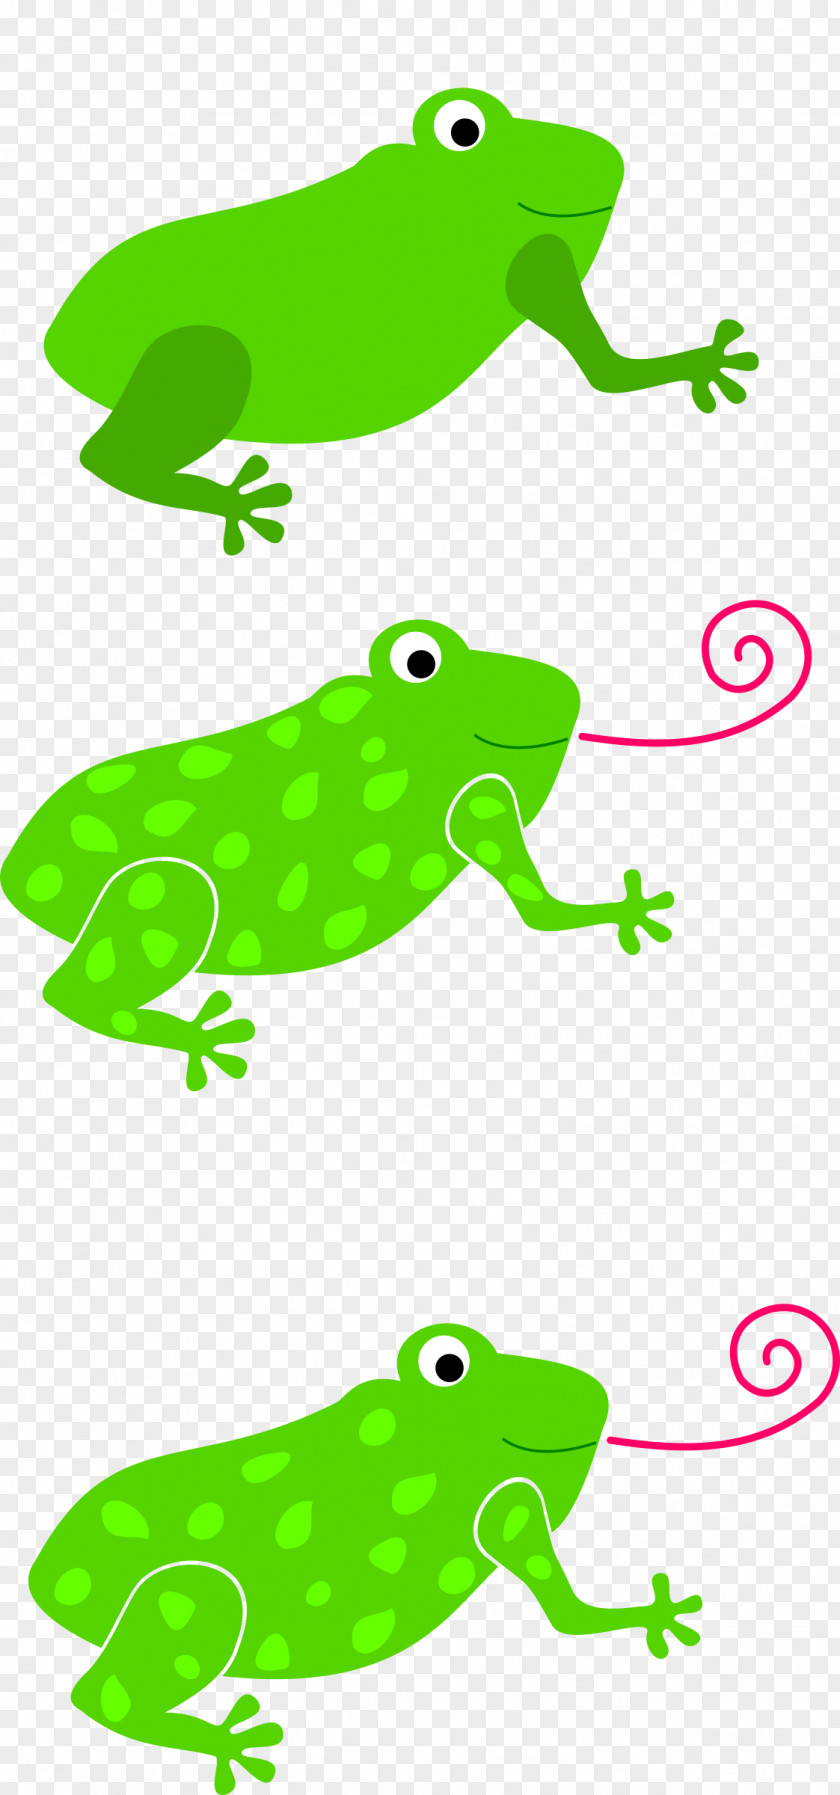 Frog Tree Tongue Toad Clip Art PNG